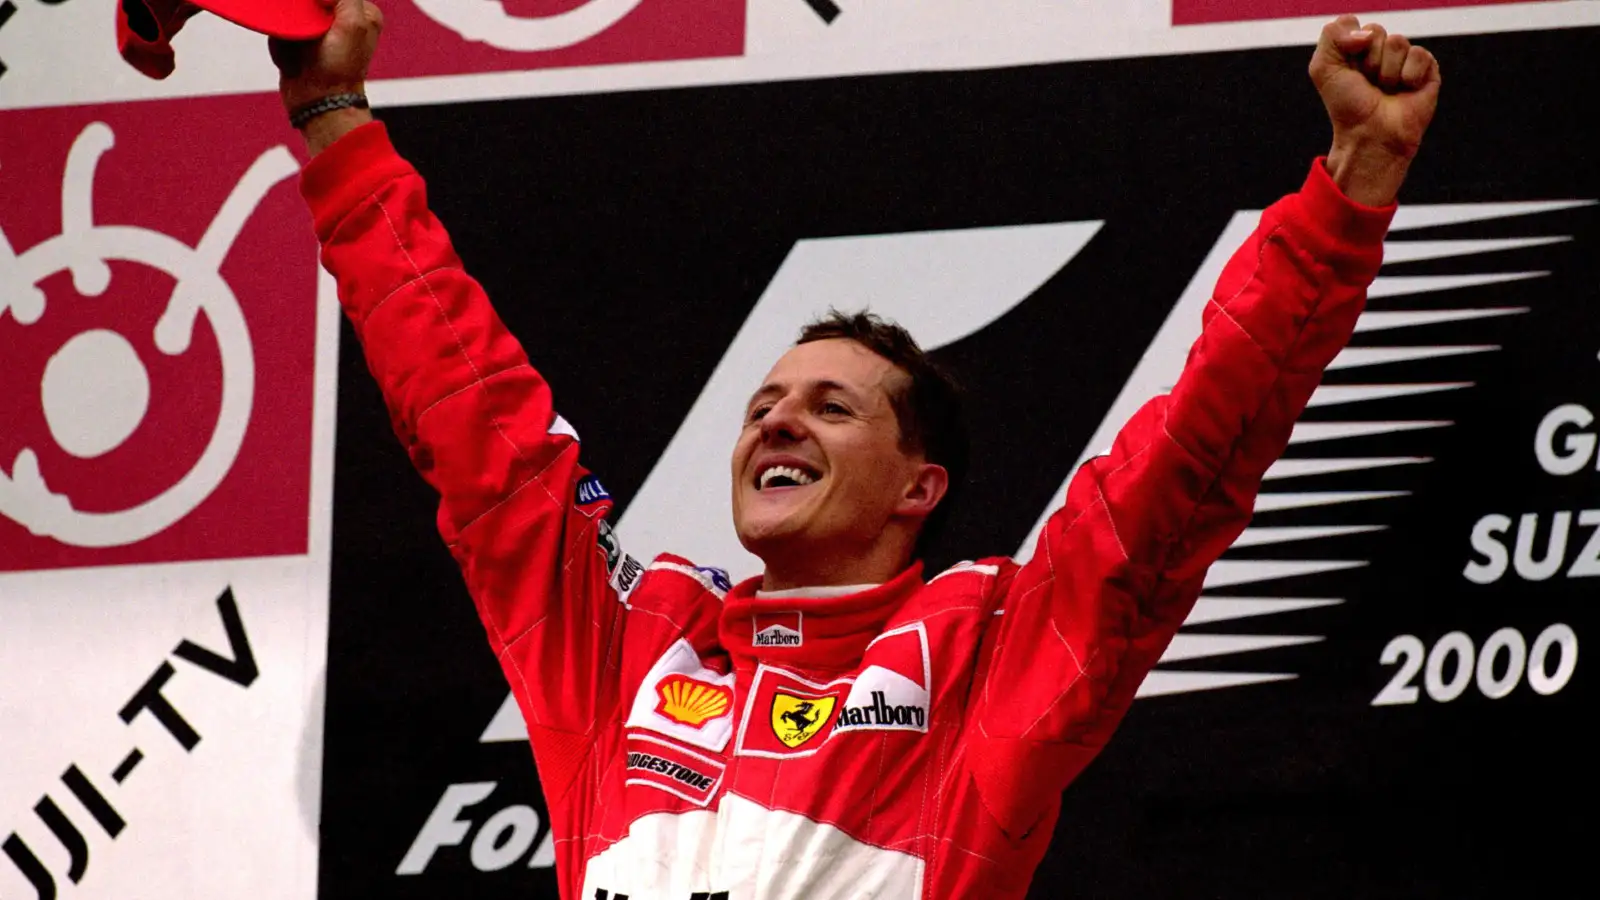  Michael Schumacher Hintergrundbild 1600x900. Michael Schumacher accident: Separating the facts from fiction